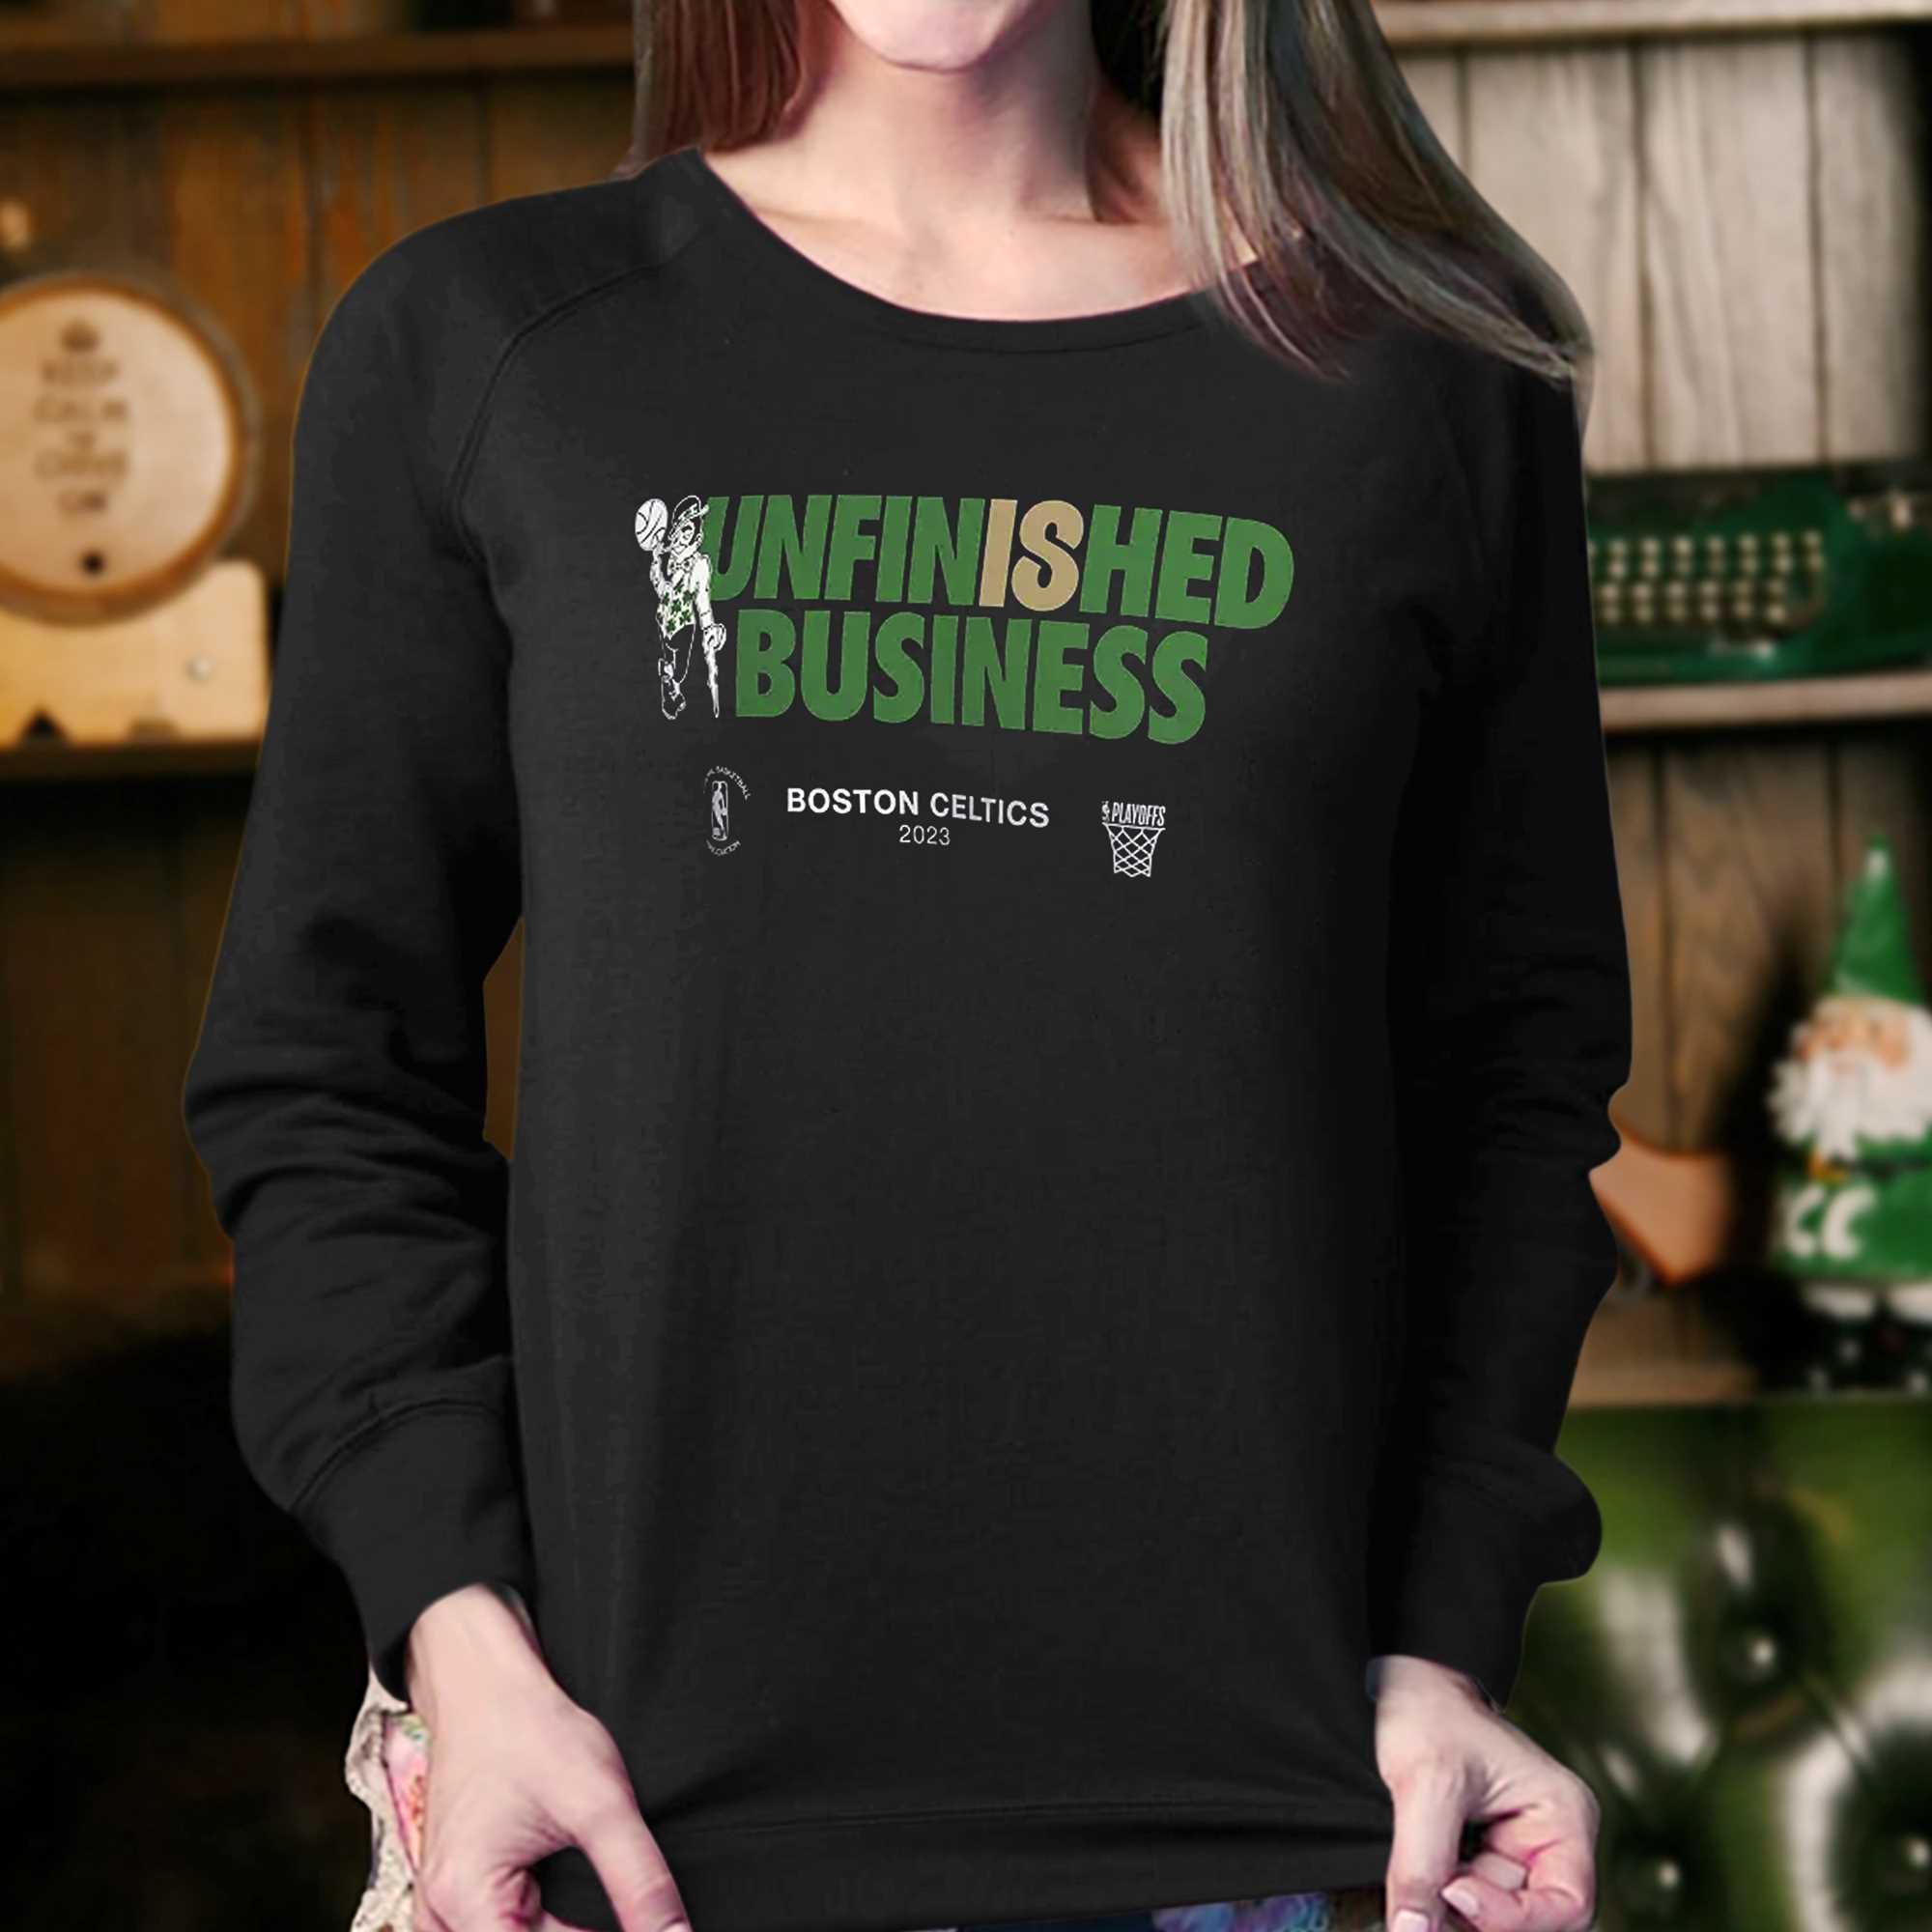 Official Unfinished Business Boston Celtics Shirt 